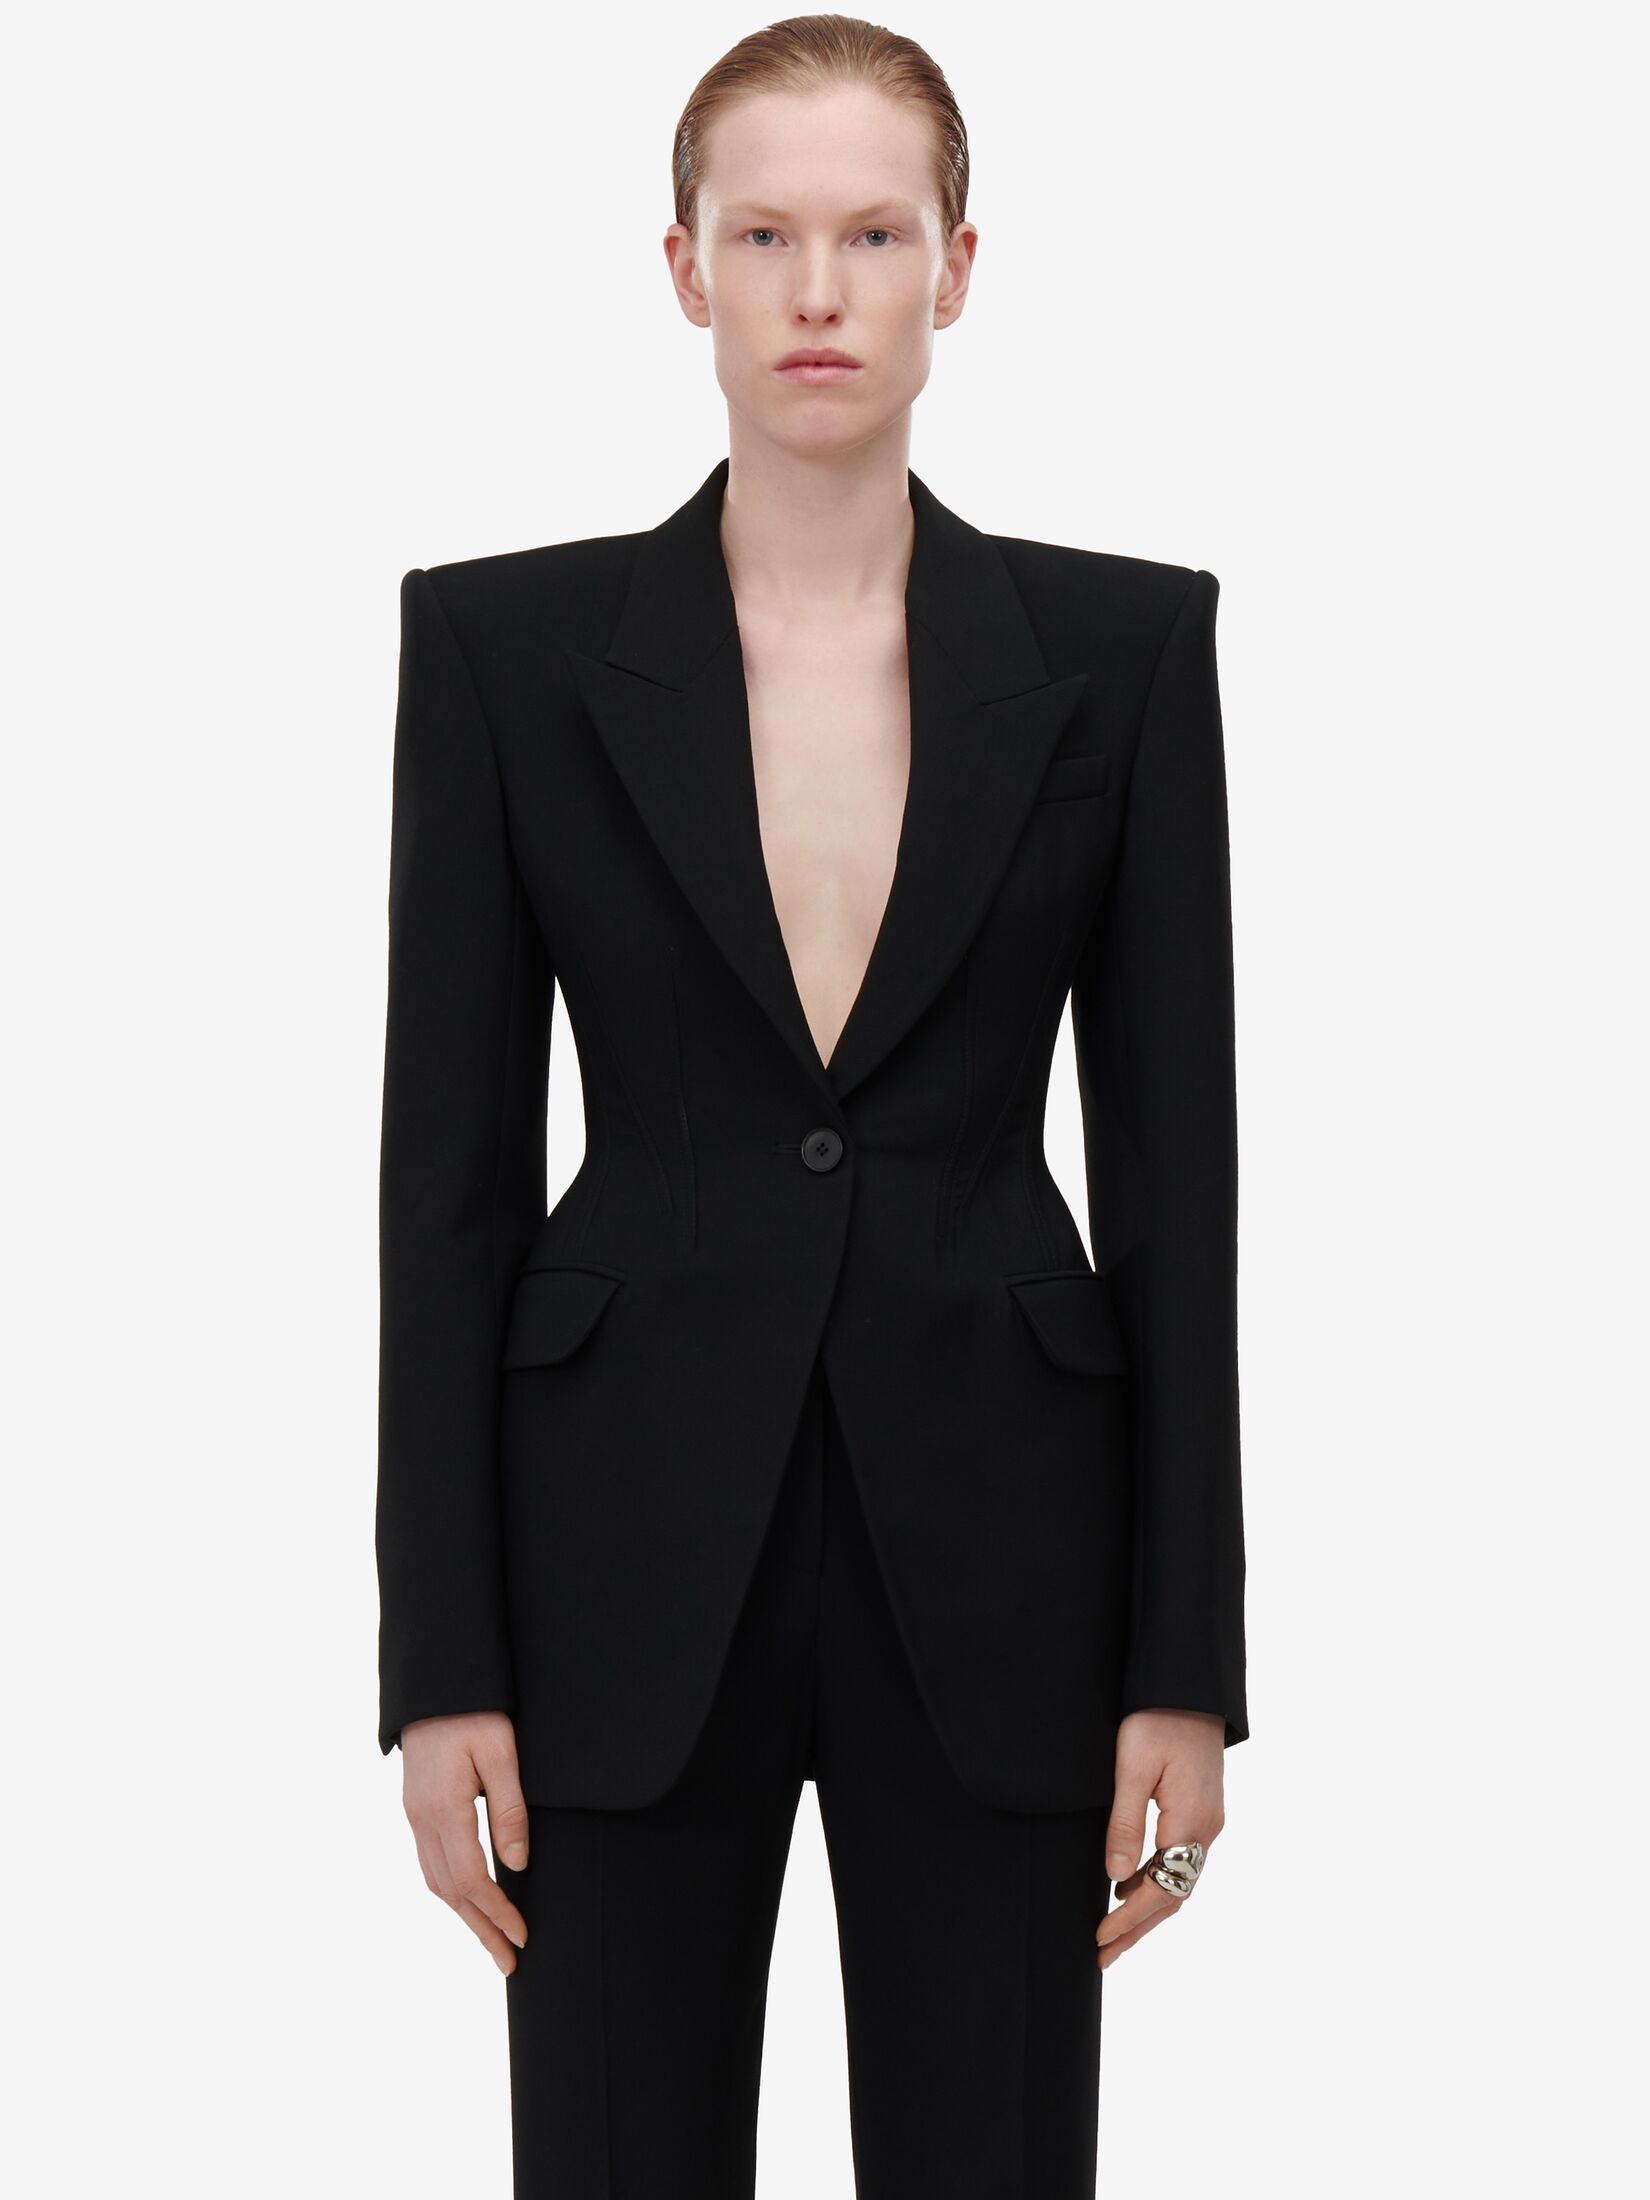 NDL Women Gray Black Tuxedo Jacket 4 Button Casual Trousers Suit Gray -  Wholesale Clothing Vendors